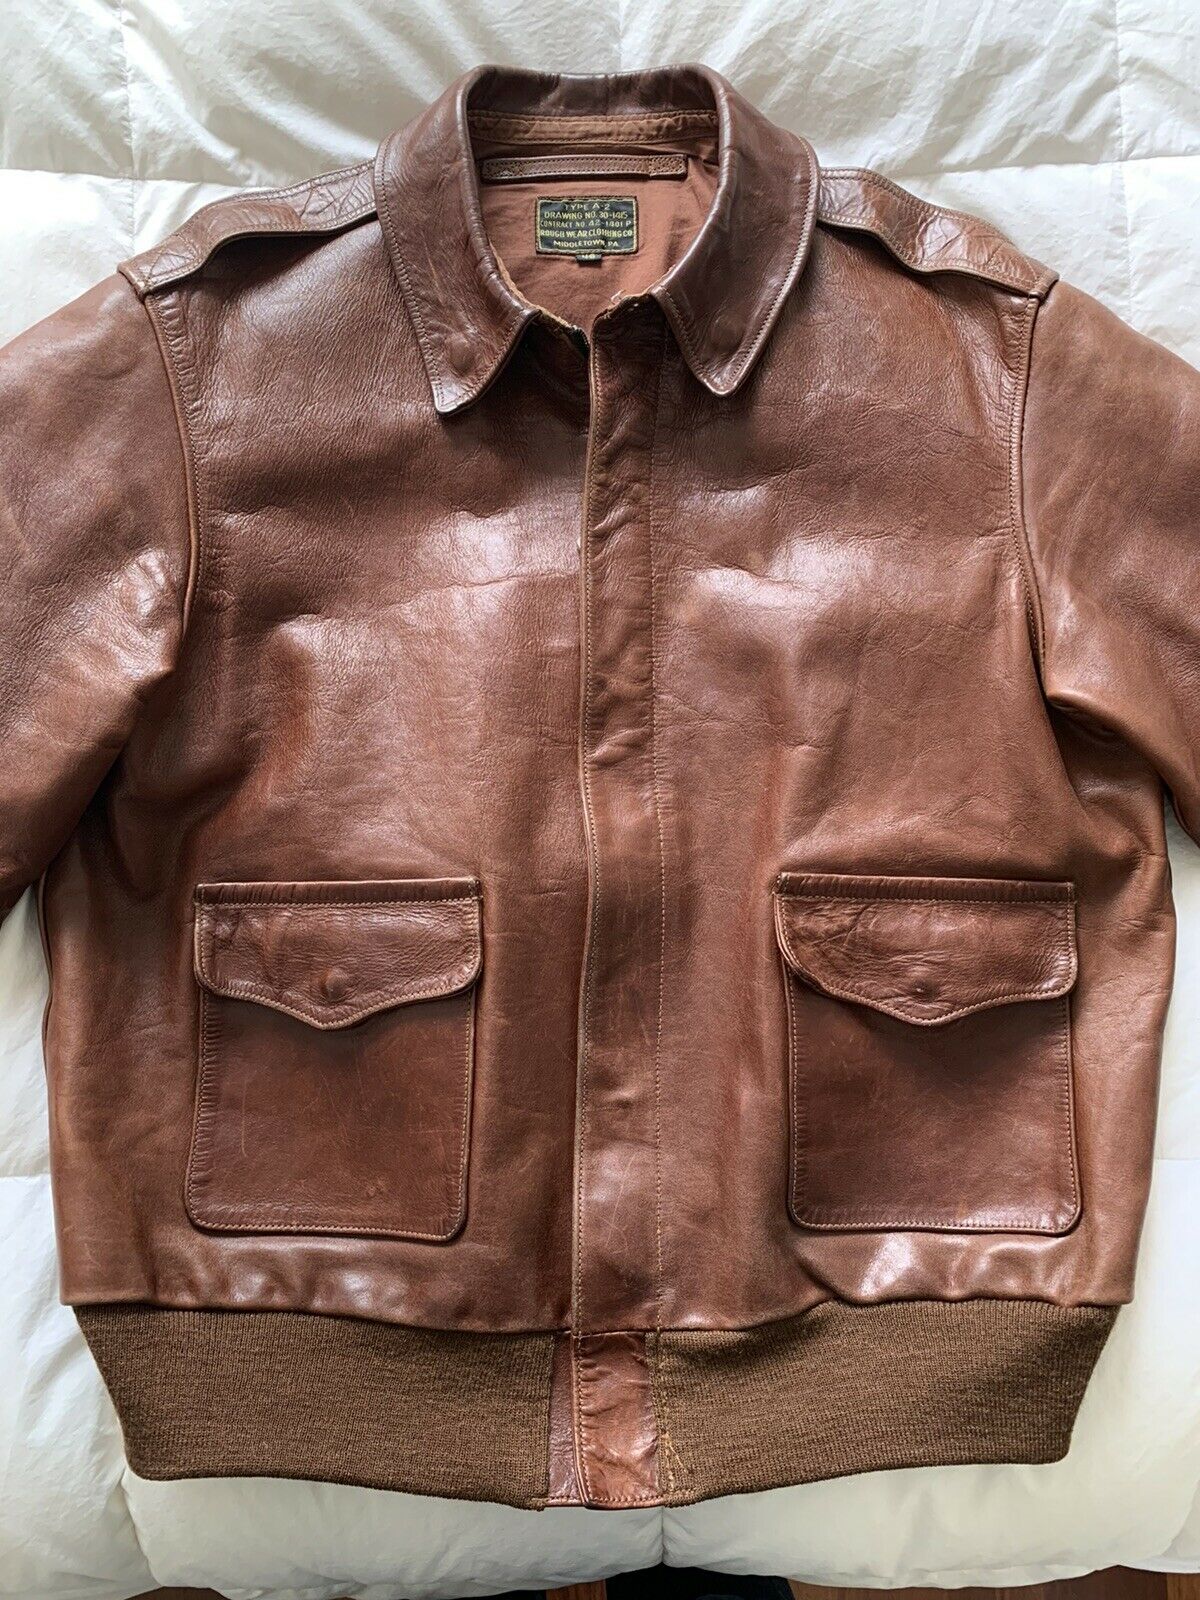 Goodwear Rough Wear A2 Size 46 | Vintage Leather Jackets Forum